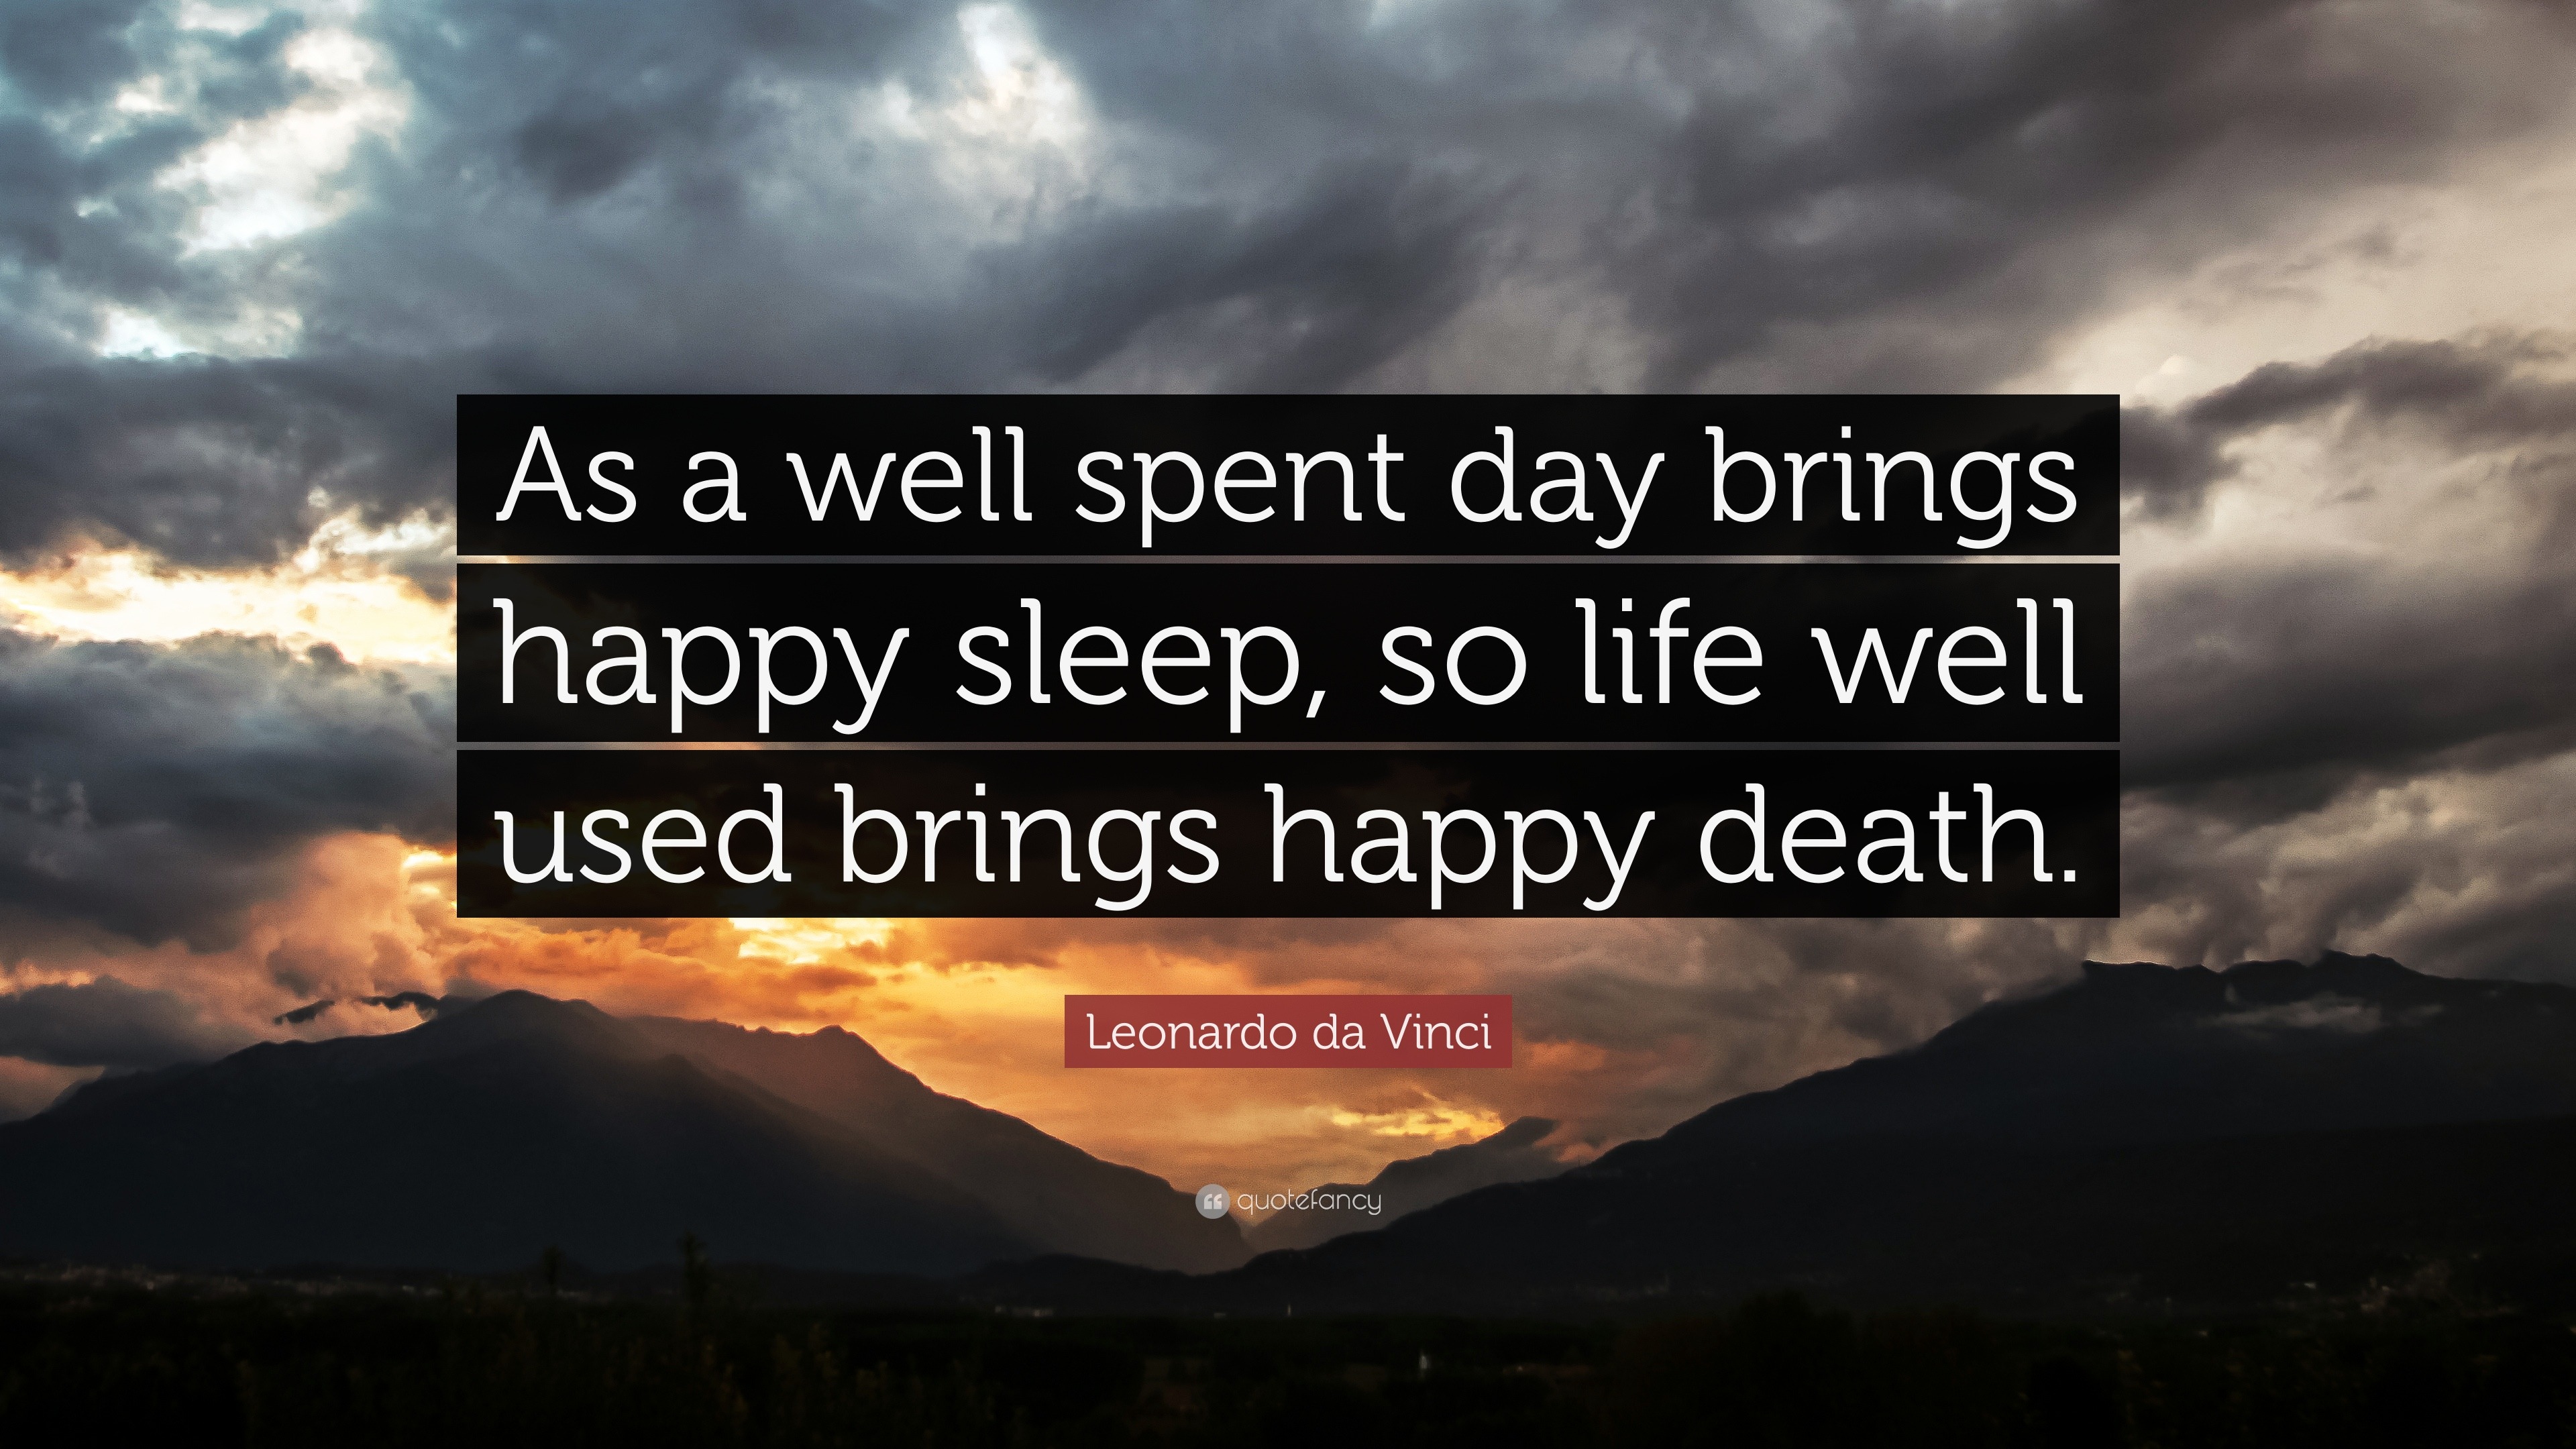 Leonardo da Vinci Quote “As a well spent day brings happy sleep so